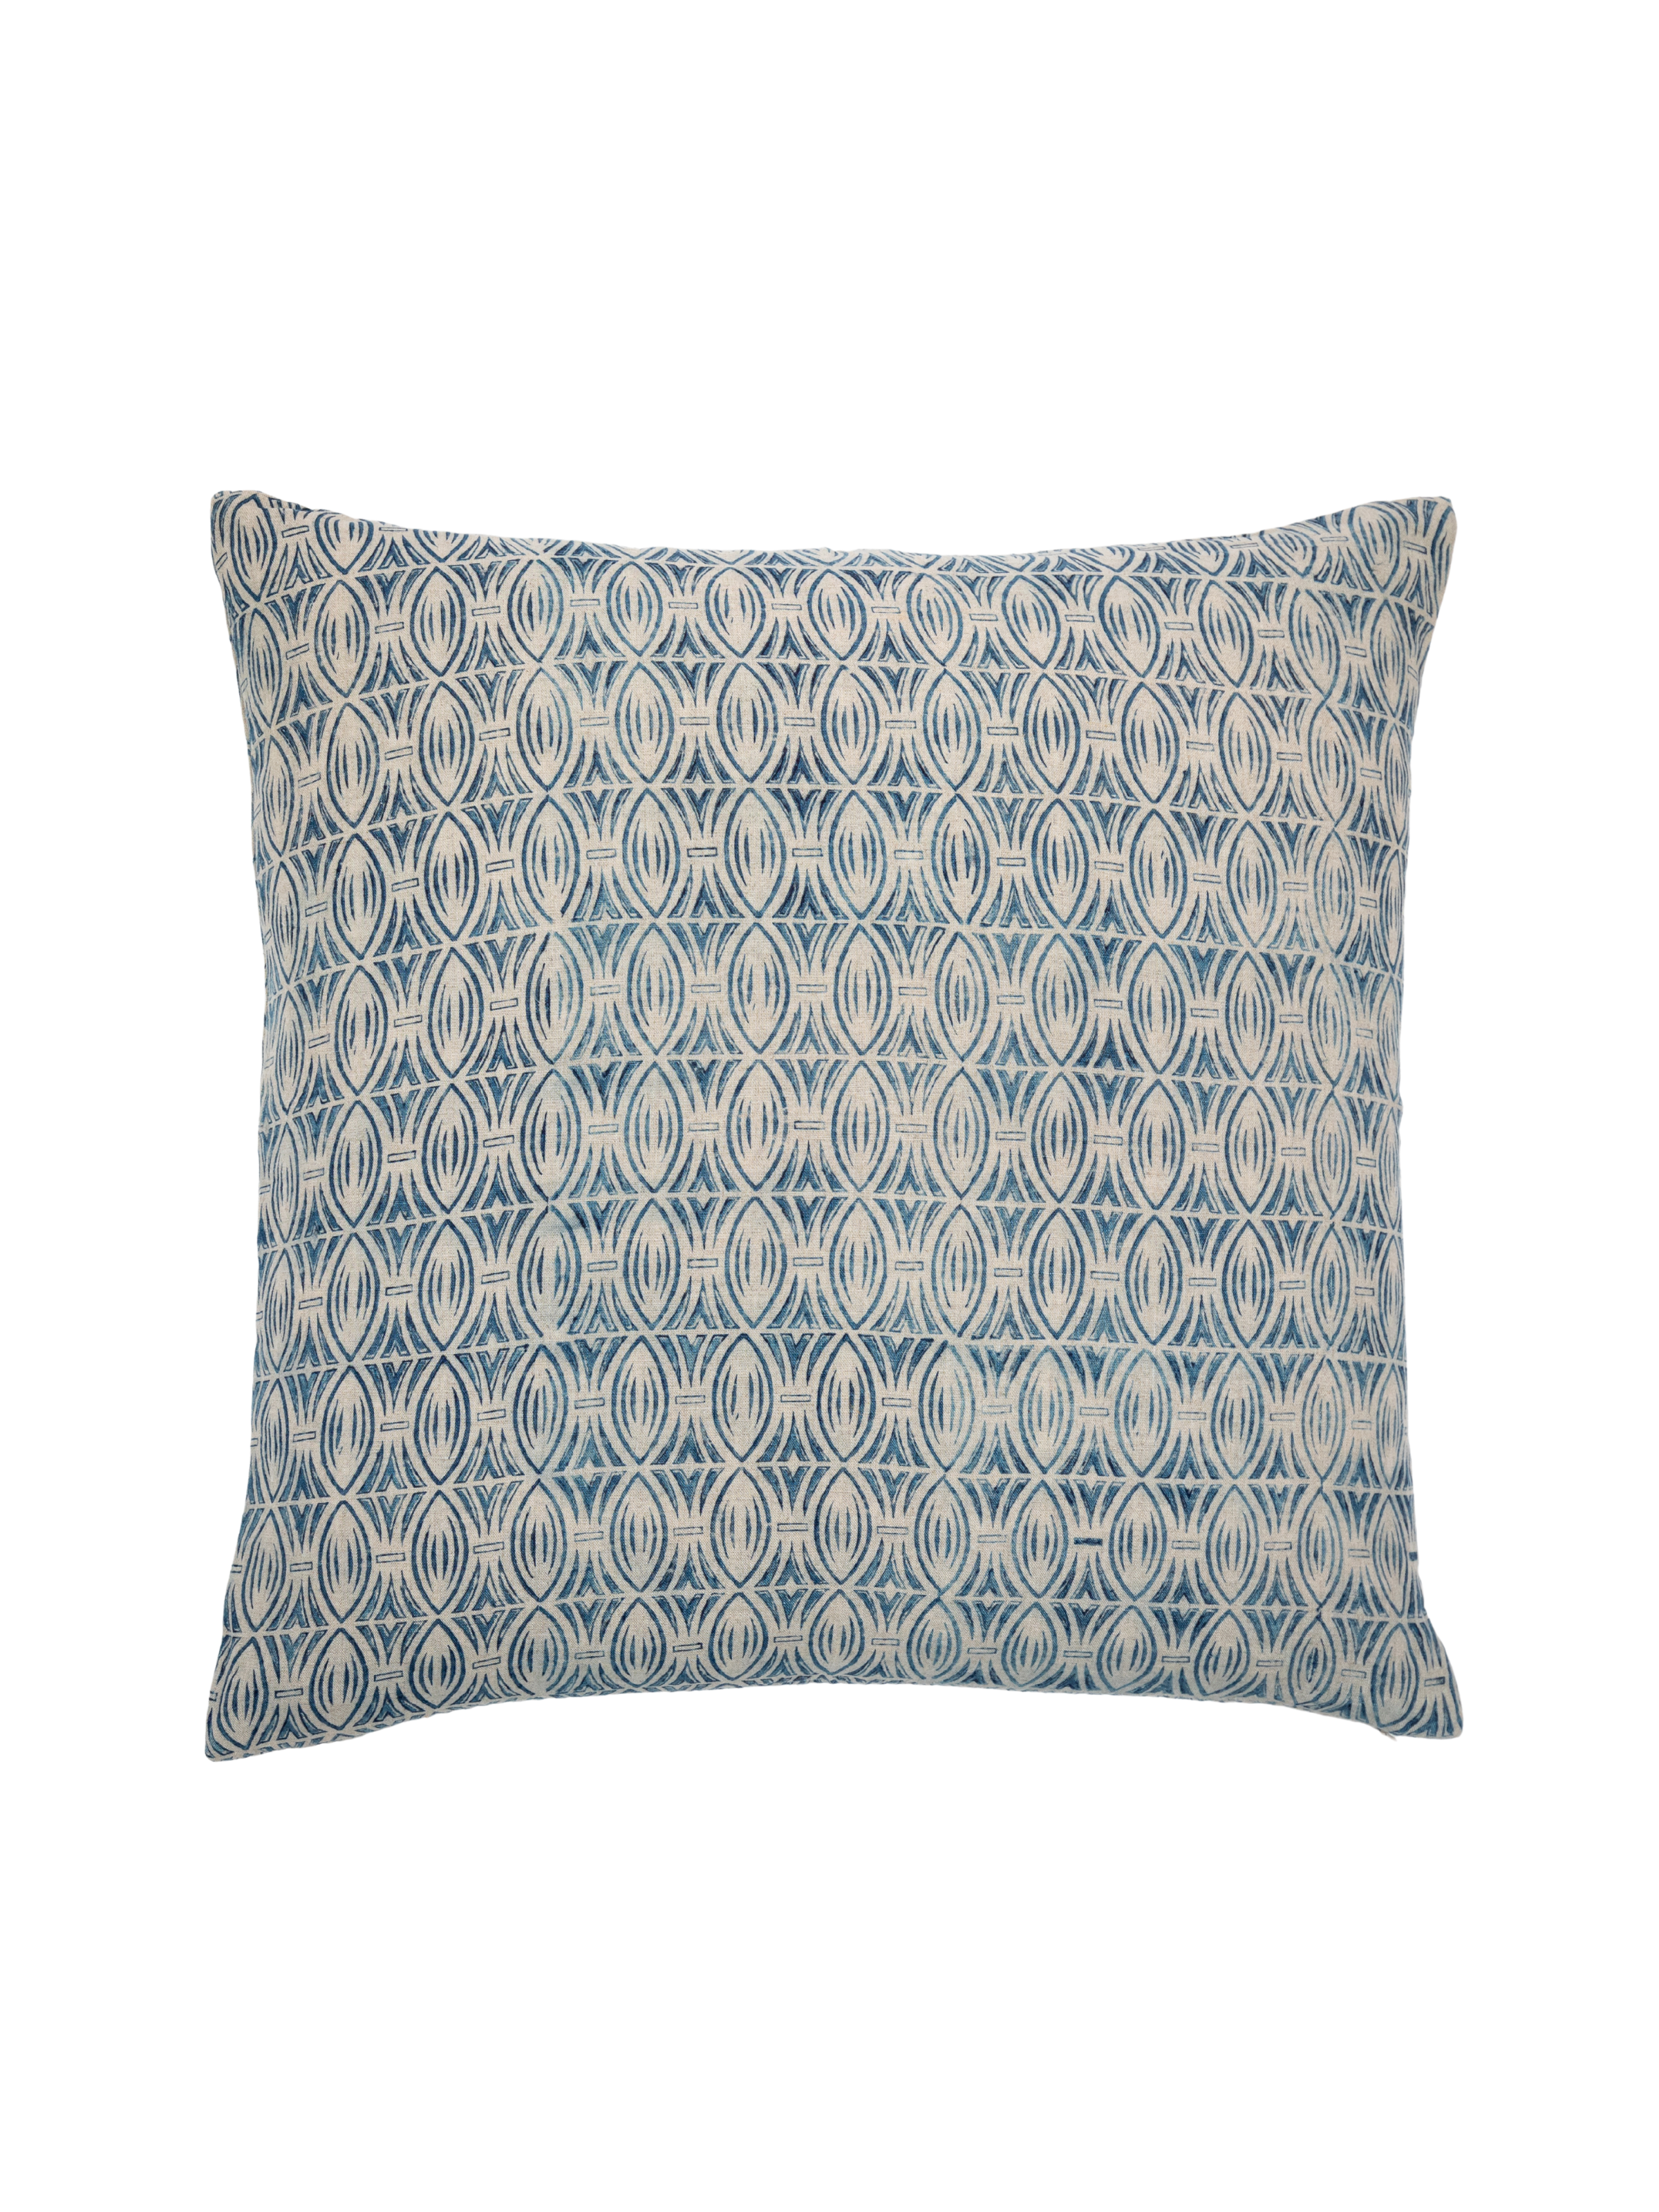 Zulu Indigo Decorative Pillow Cover